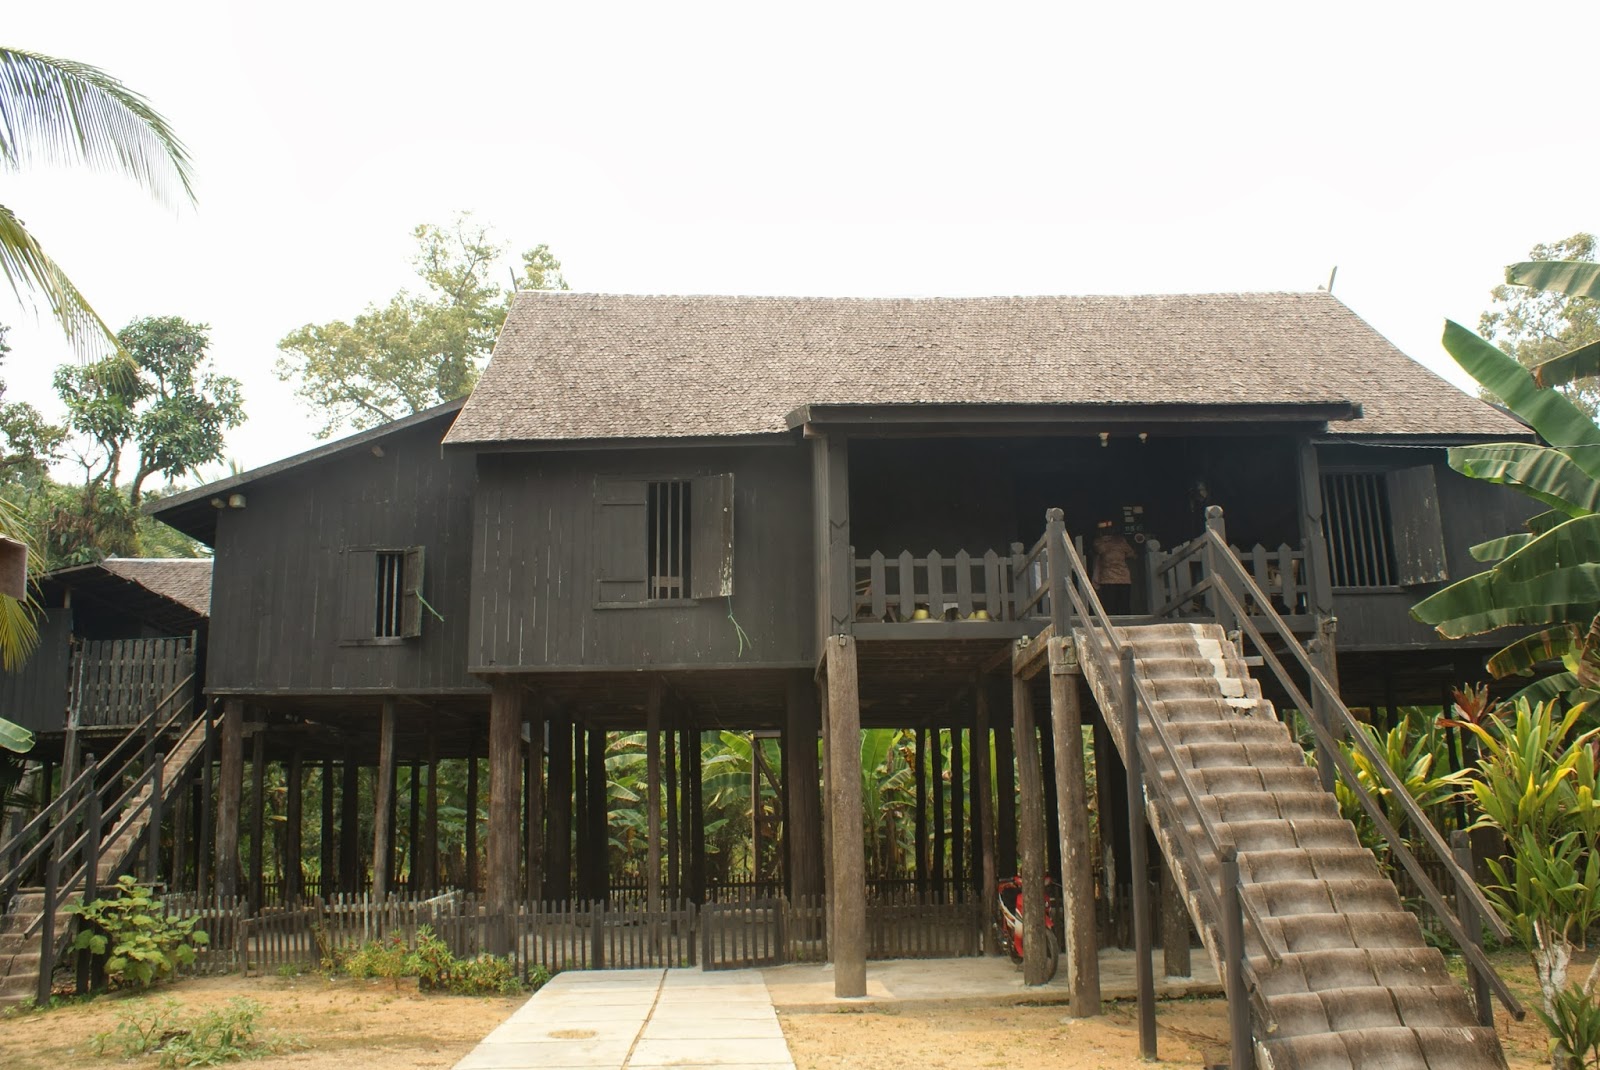 Rumah Betang Buntoi Khas Pulang Pisau. Foto: kebudayaan.kemdikbud.go.id